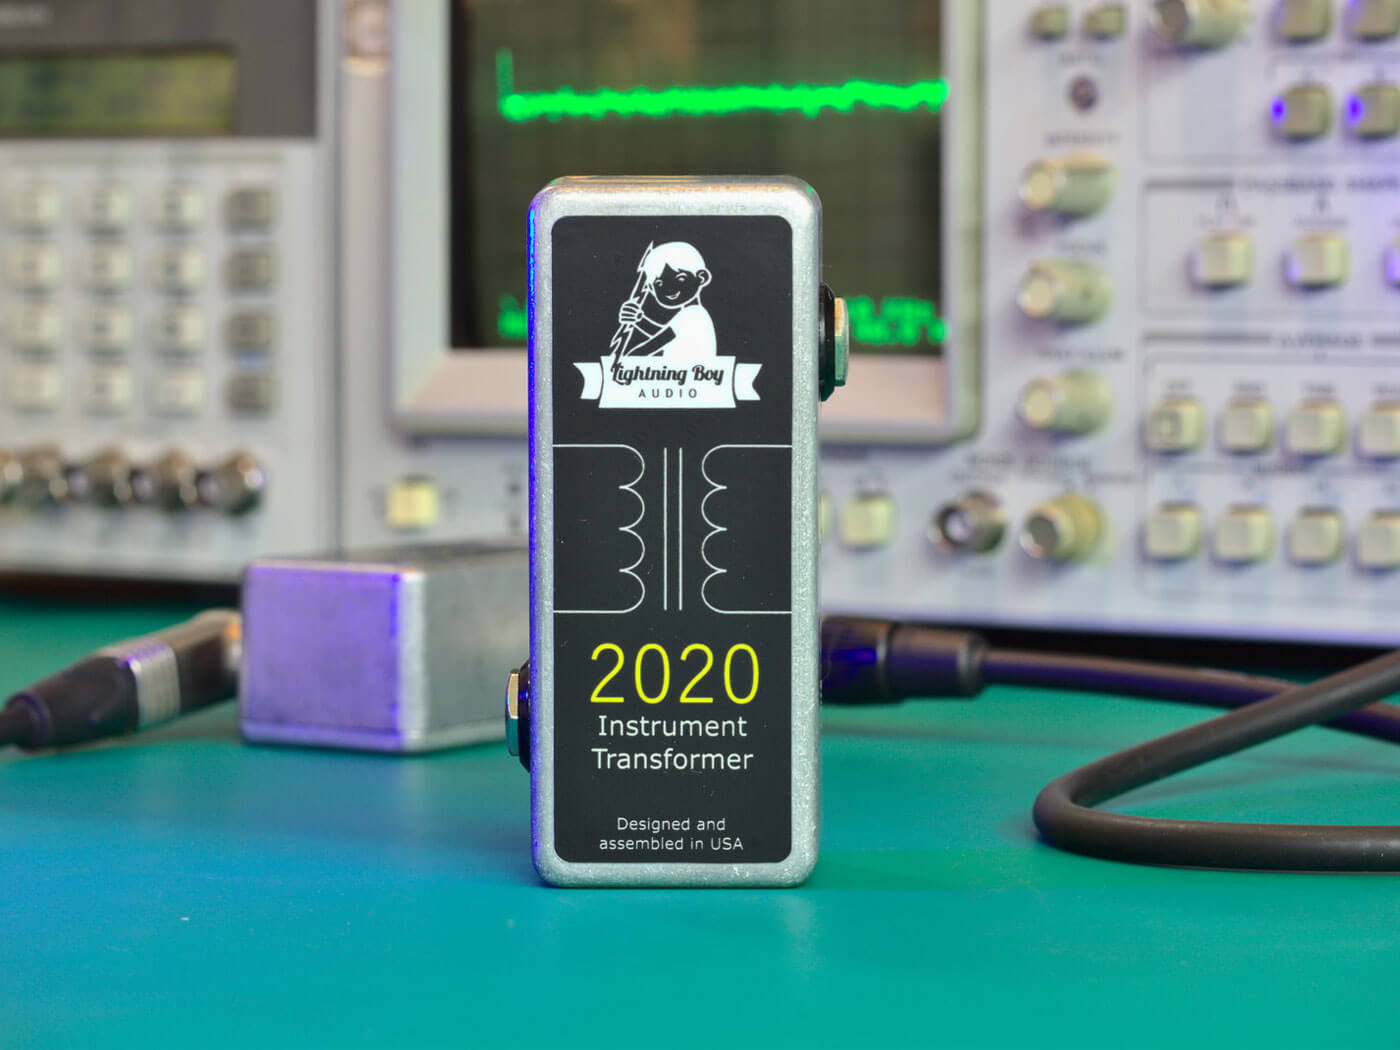 Lightning Boy Audio 2020 Transformer